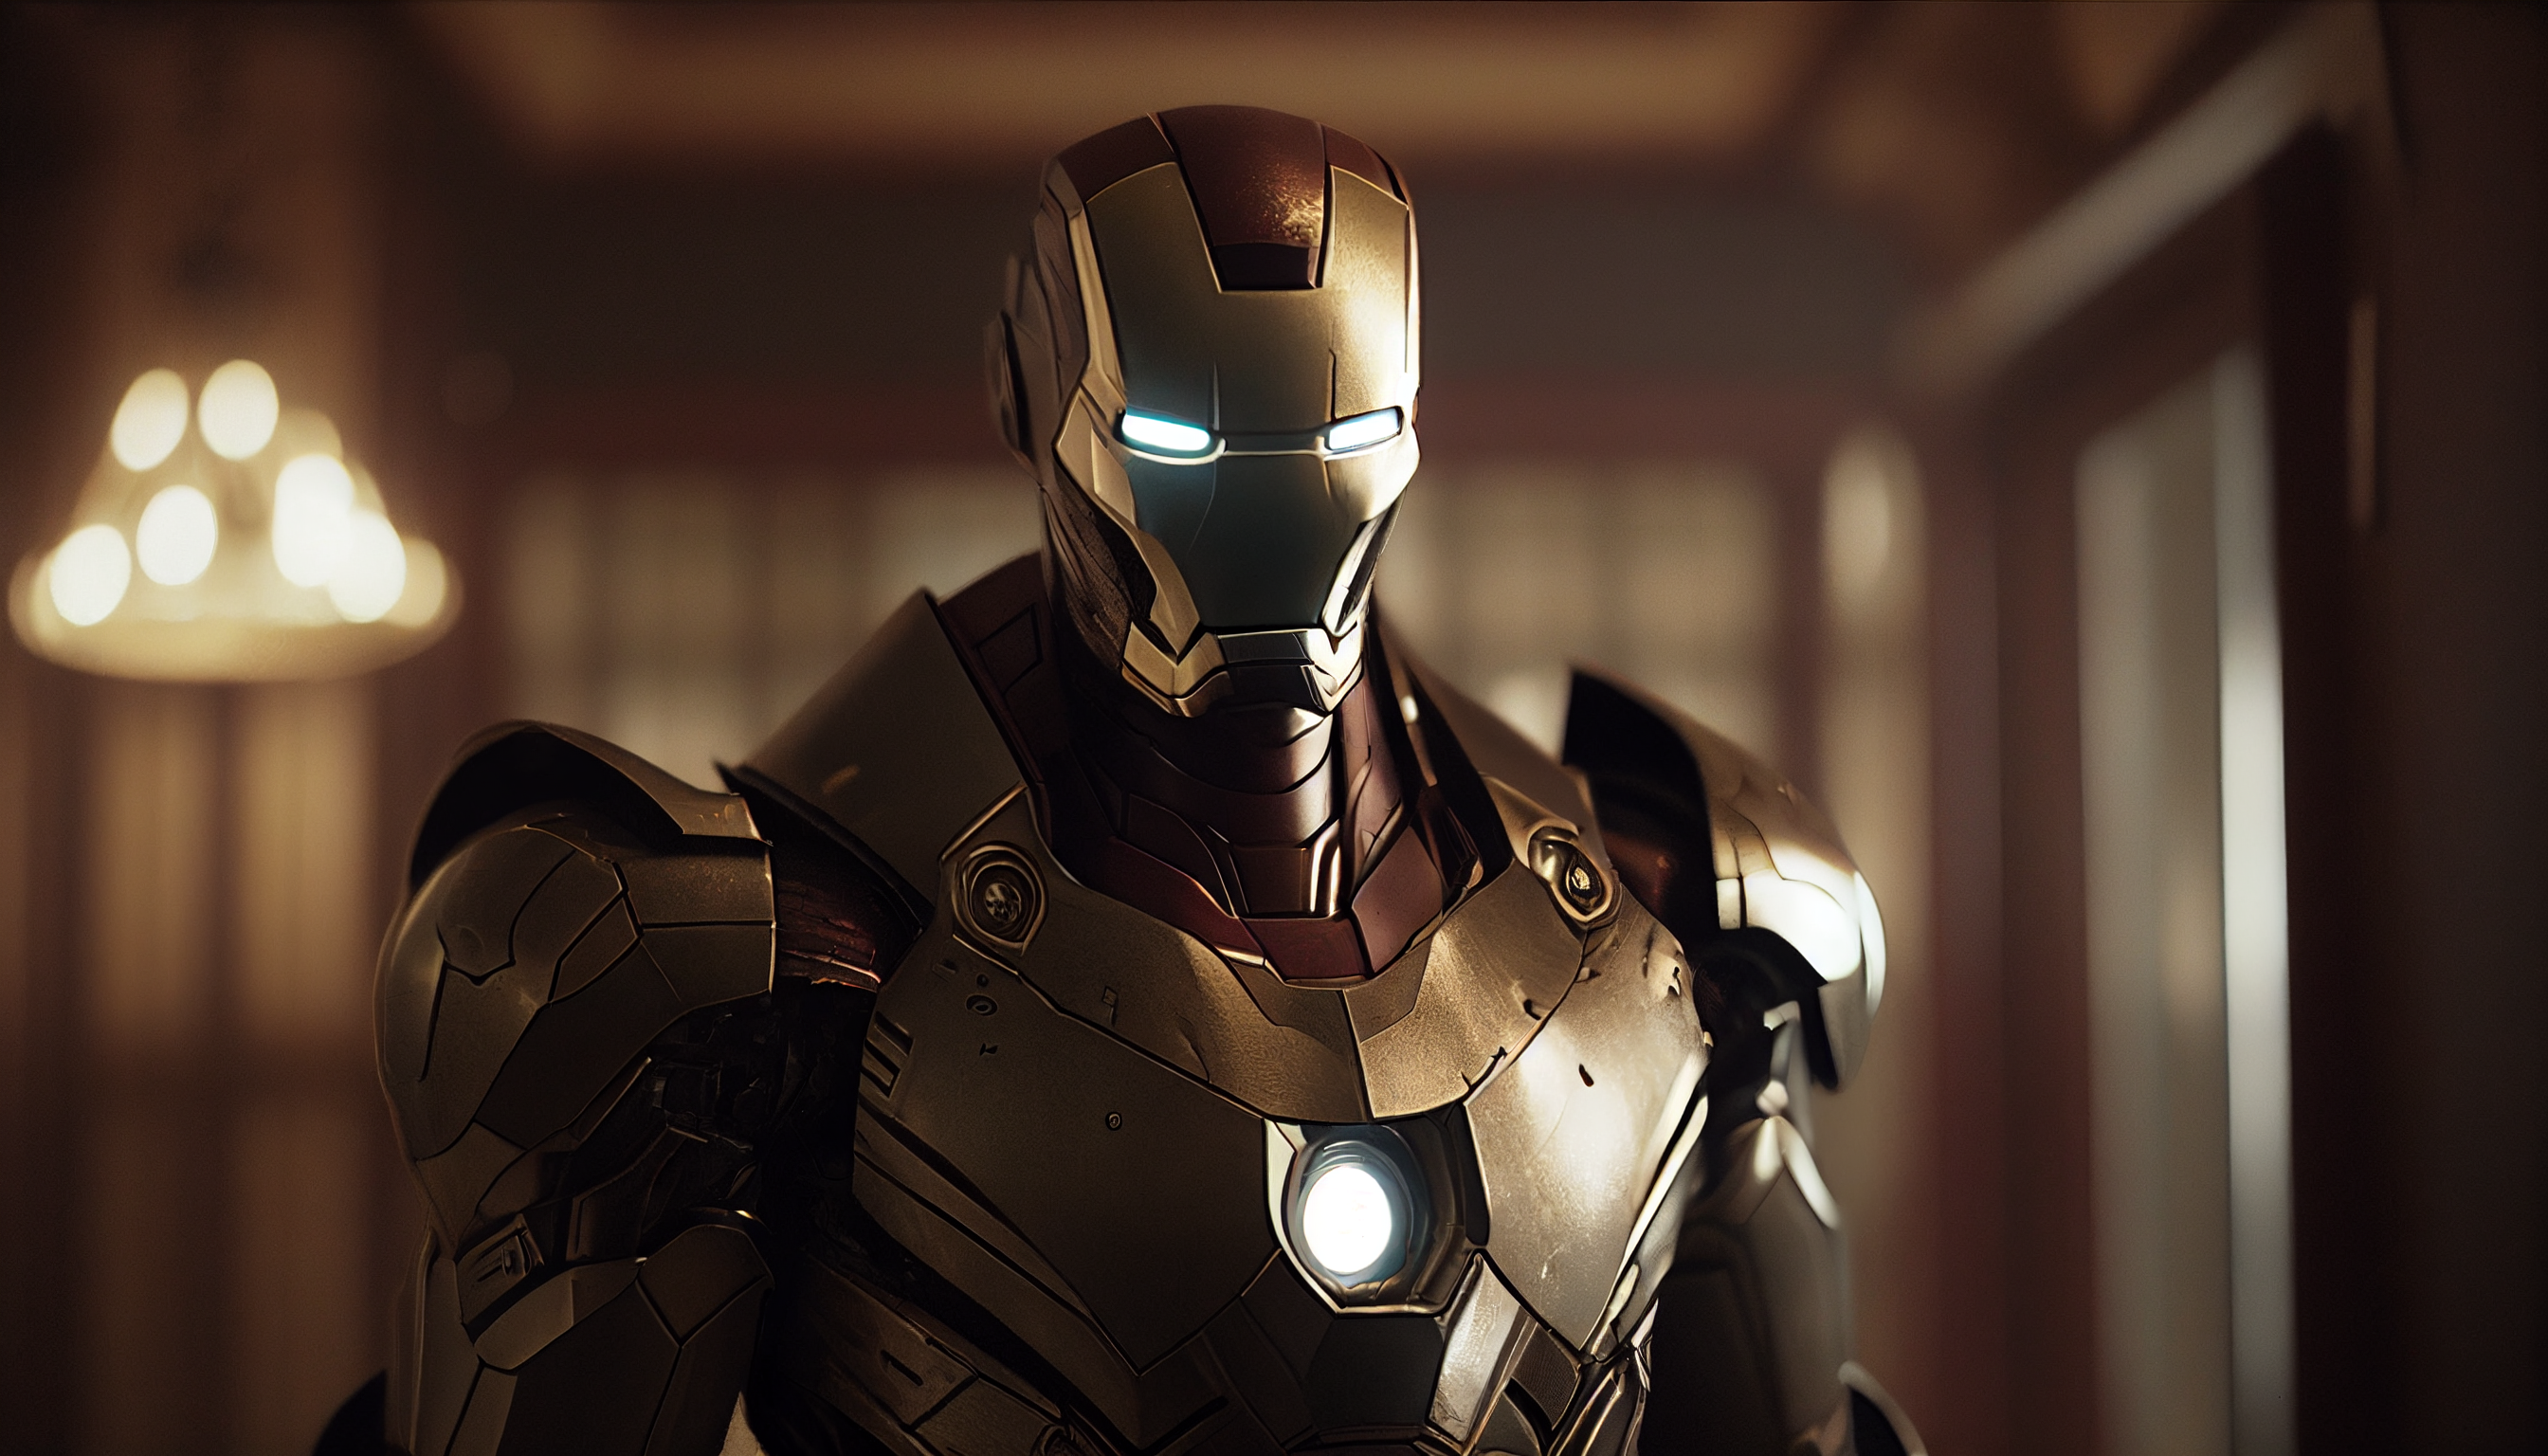 General 2688x1536 Iron Man superhero glowing eyes indoors metal armor